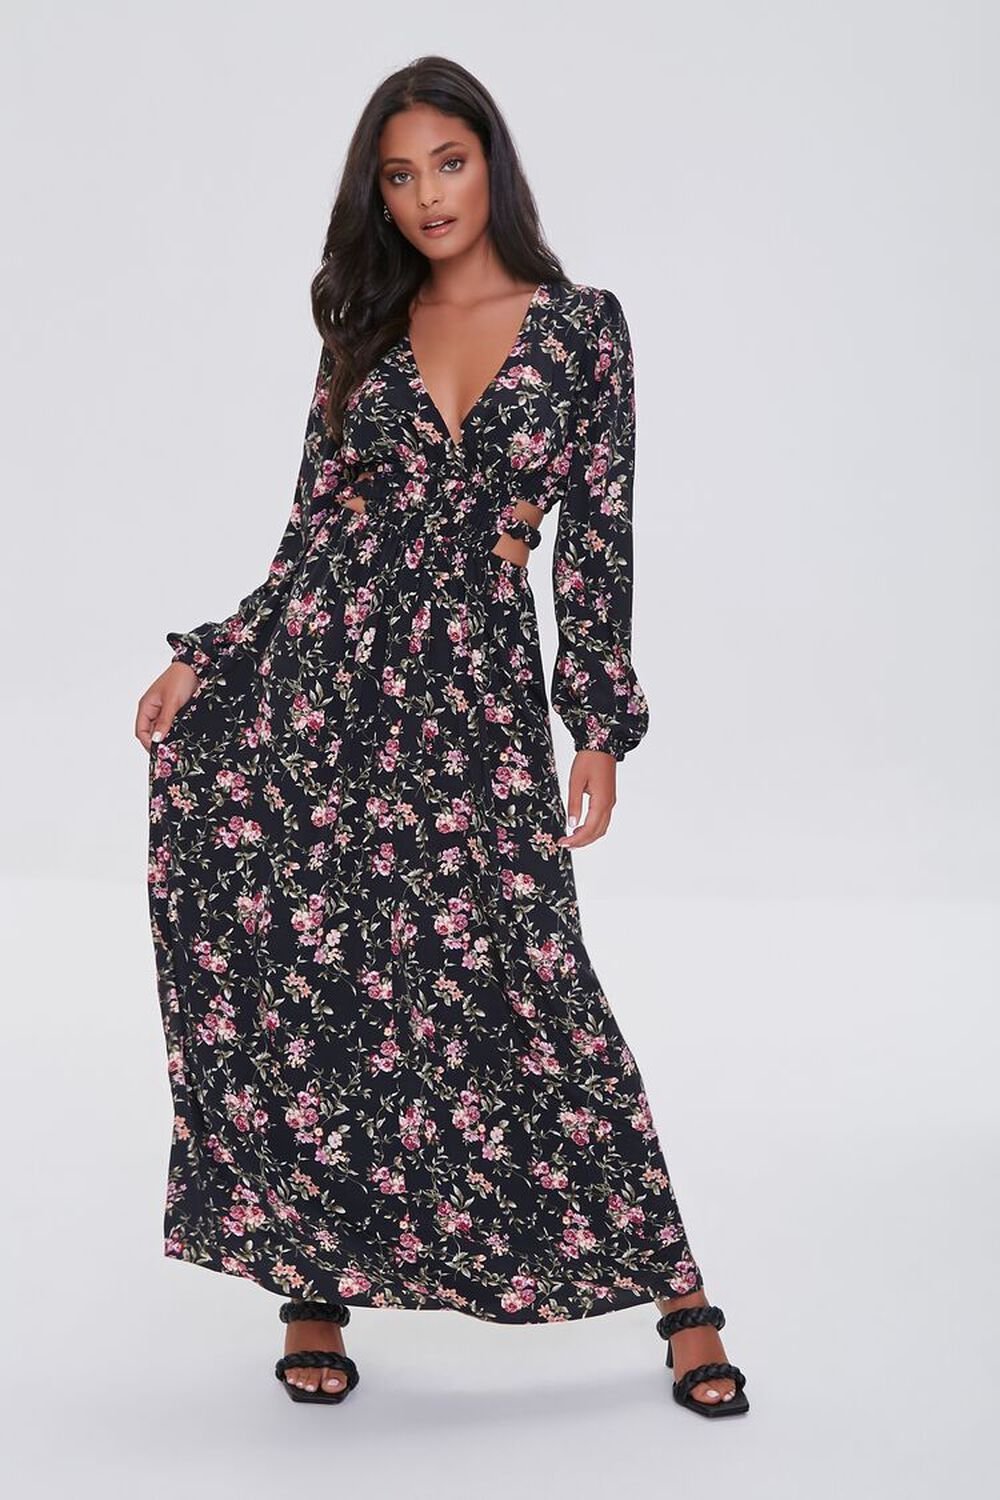 BLACK/MULTI Floral Print Cutout Maxi Dress, image 1